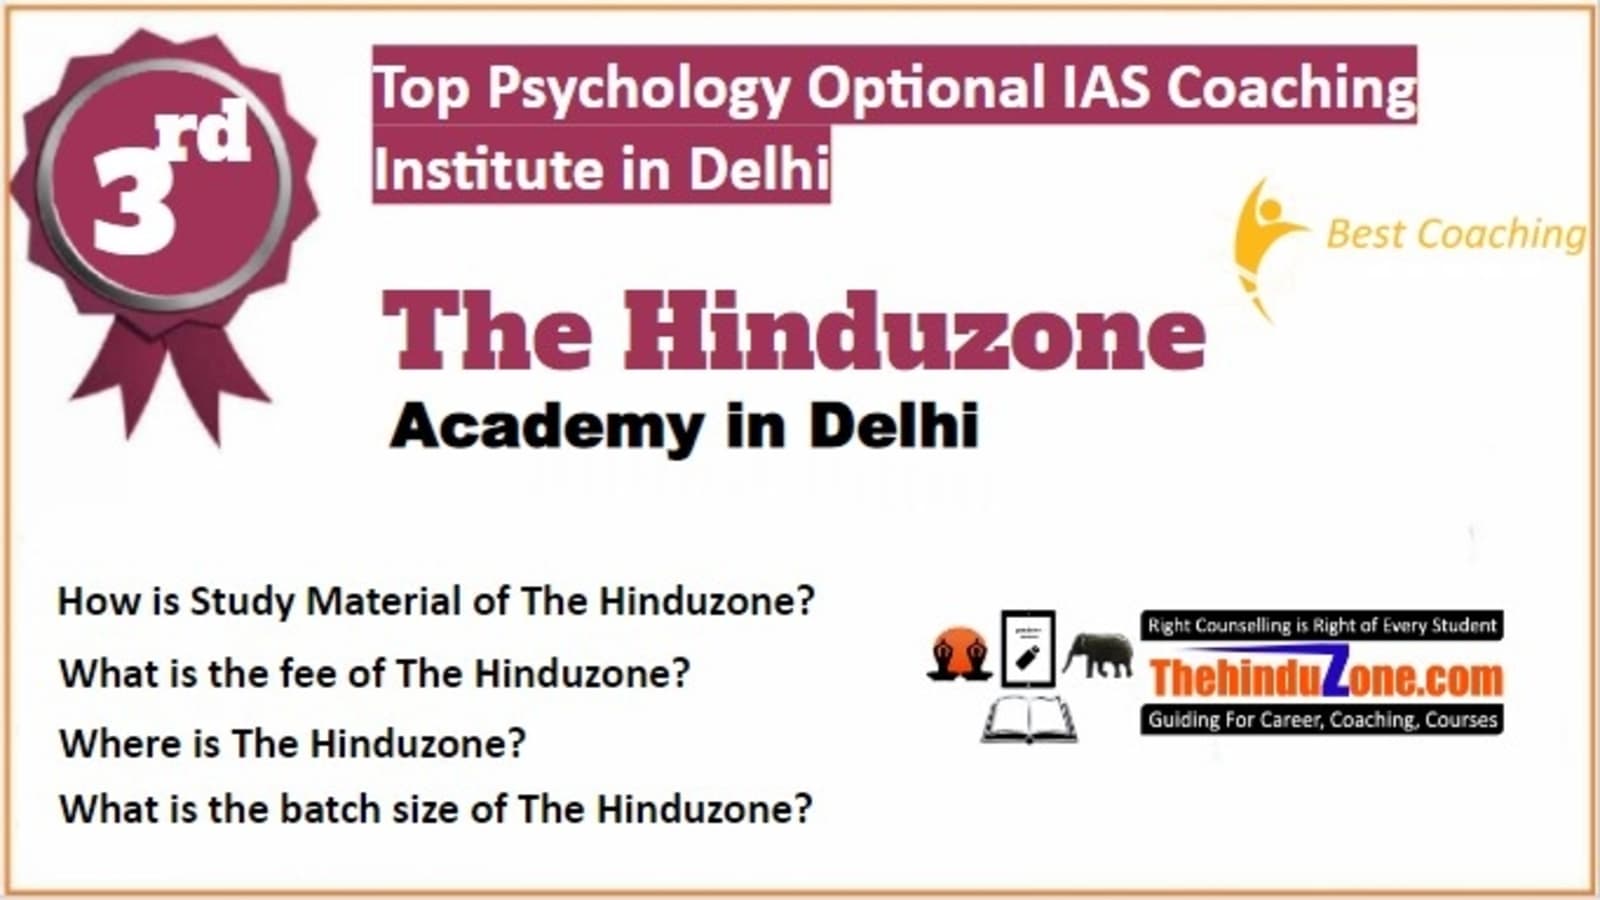 Rank 3 Best Psychology Optional IAS Coaching in Delhi